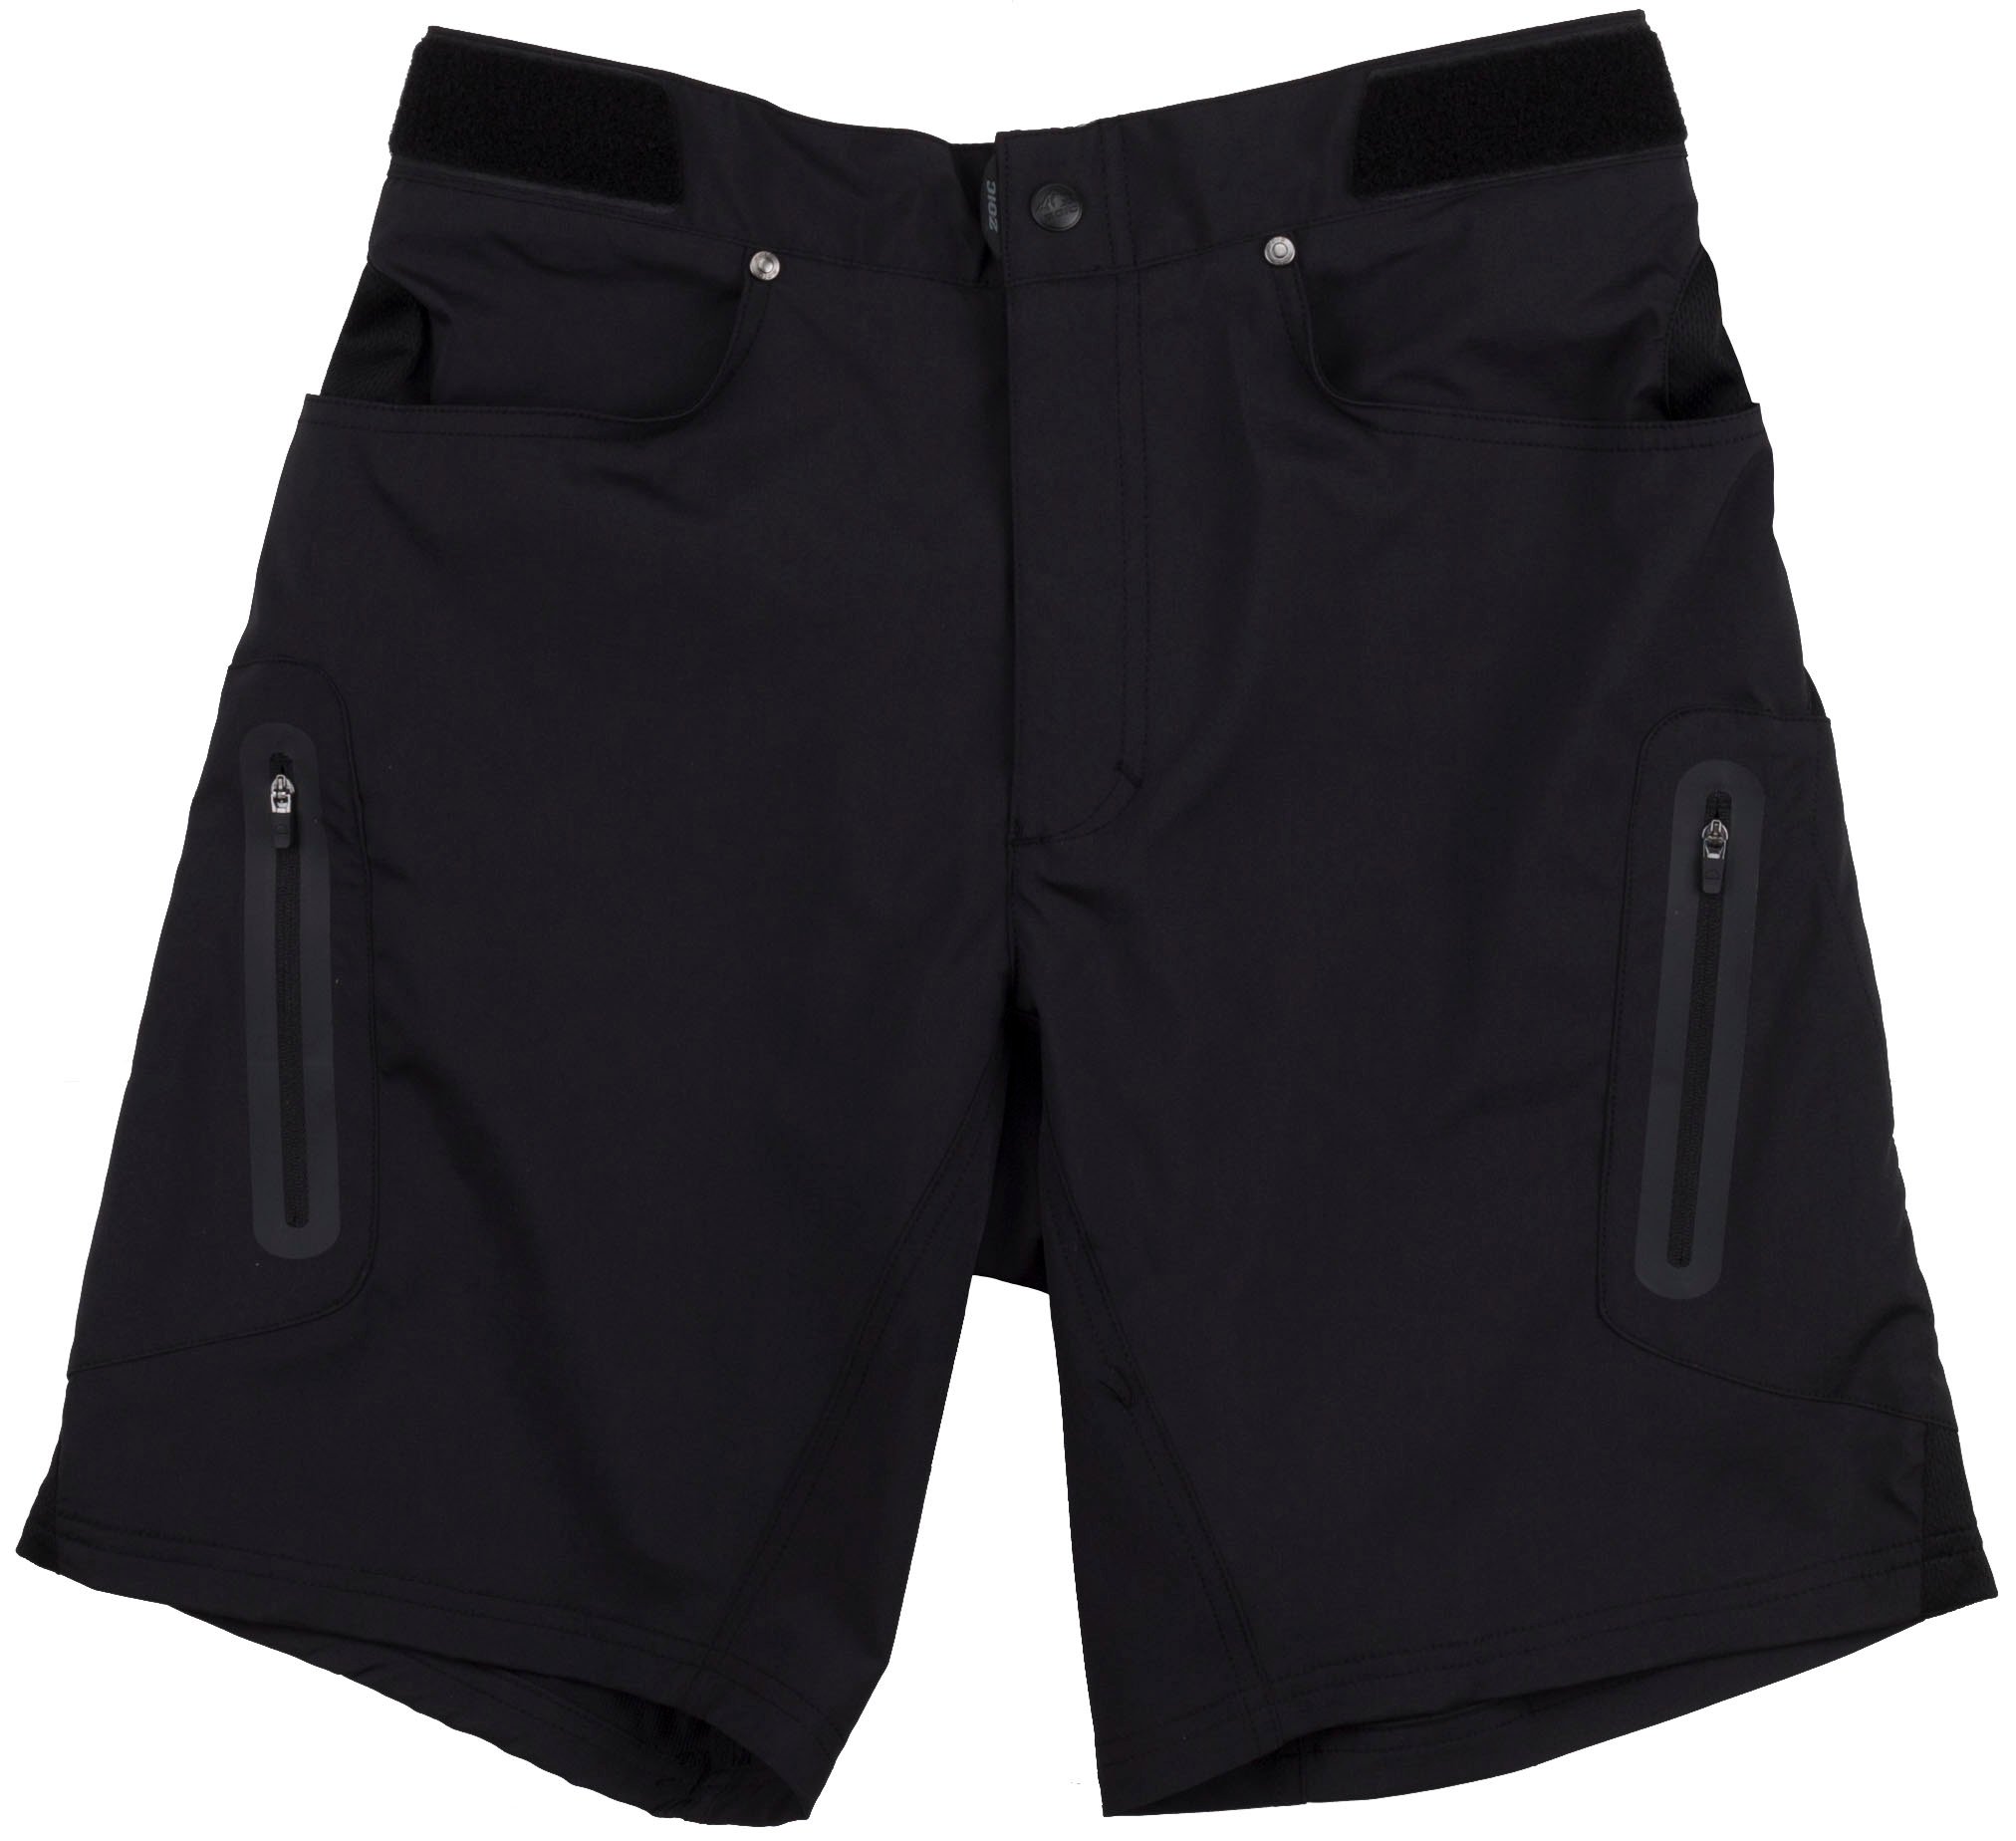 Zoic | Ether 9 Bike Shorts Men's | Size XX Large in Black